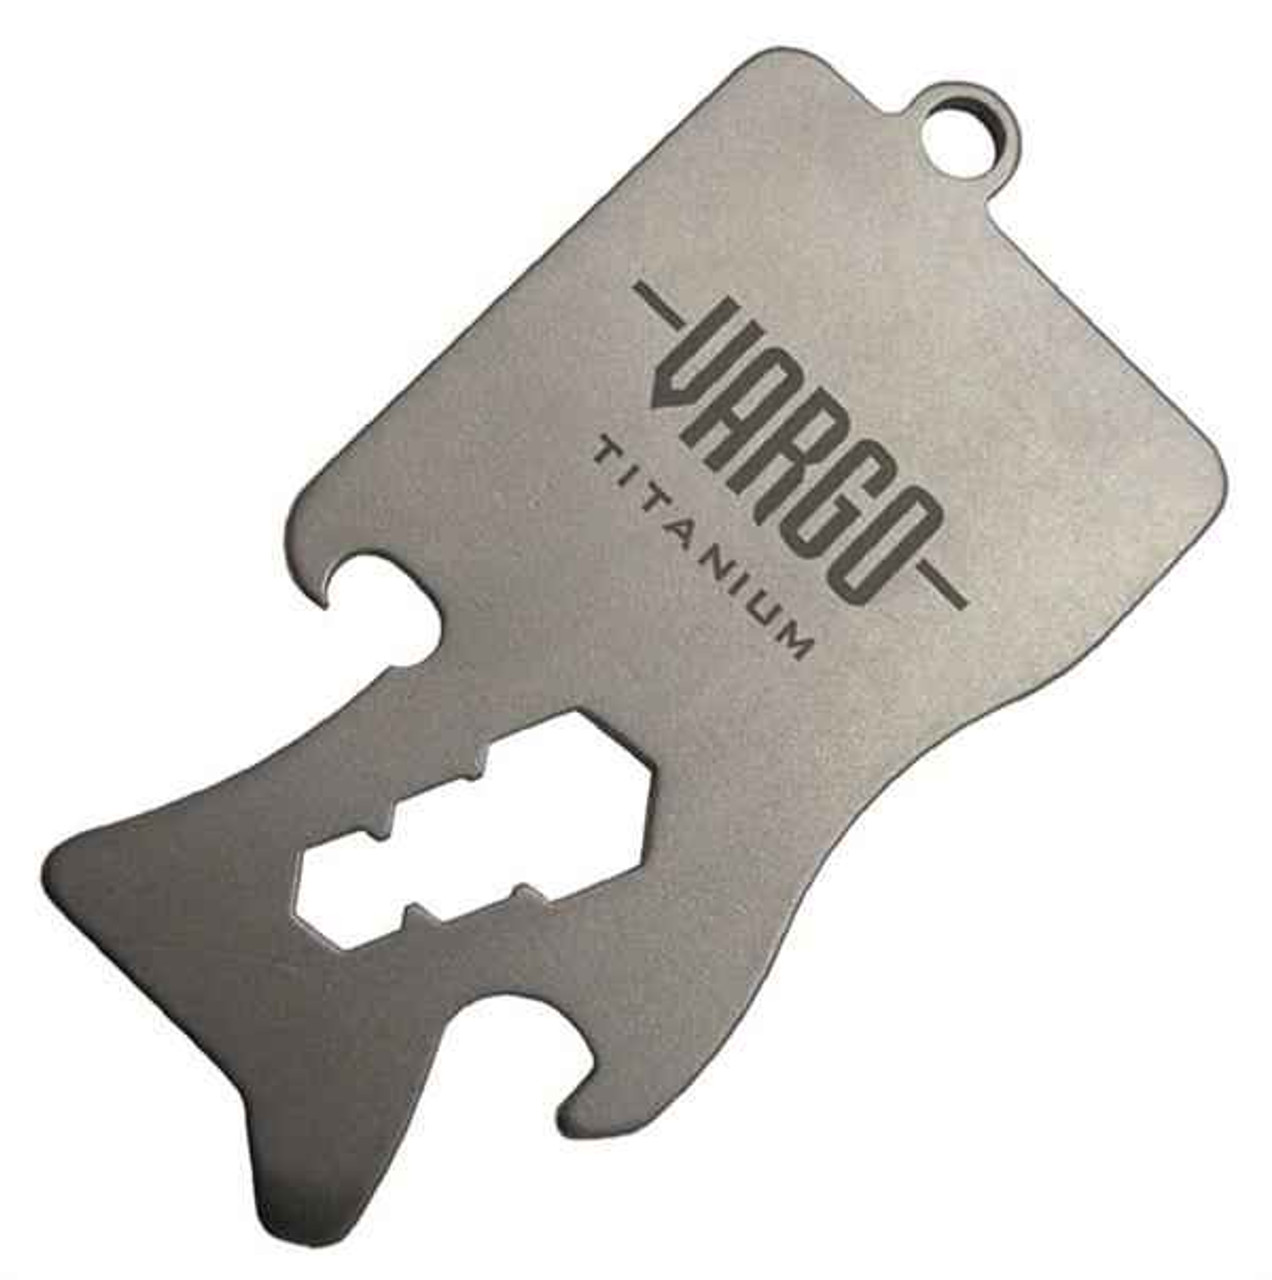 Vargo Outdoors Titanium Keychain Tool